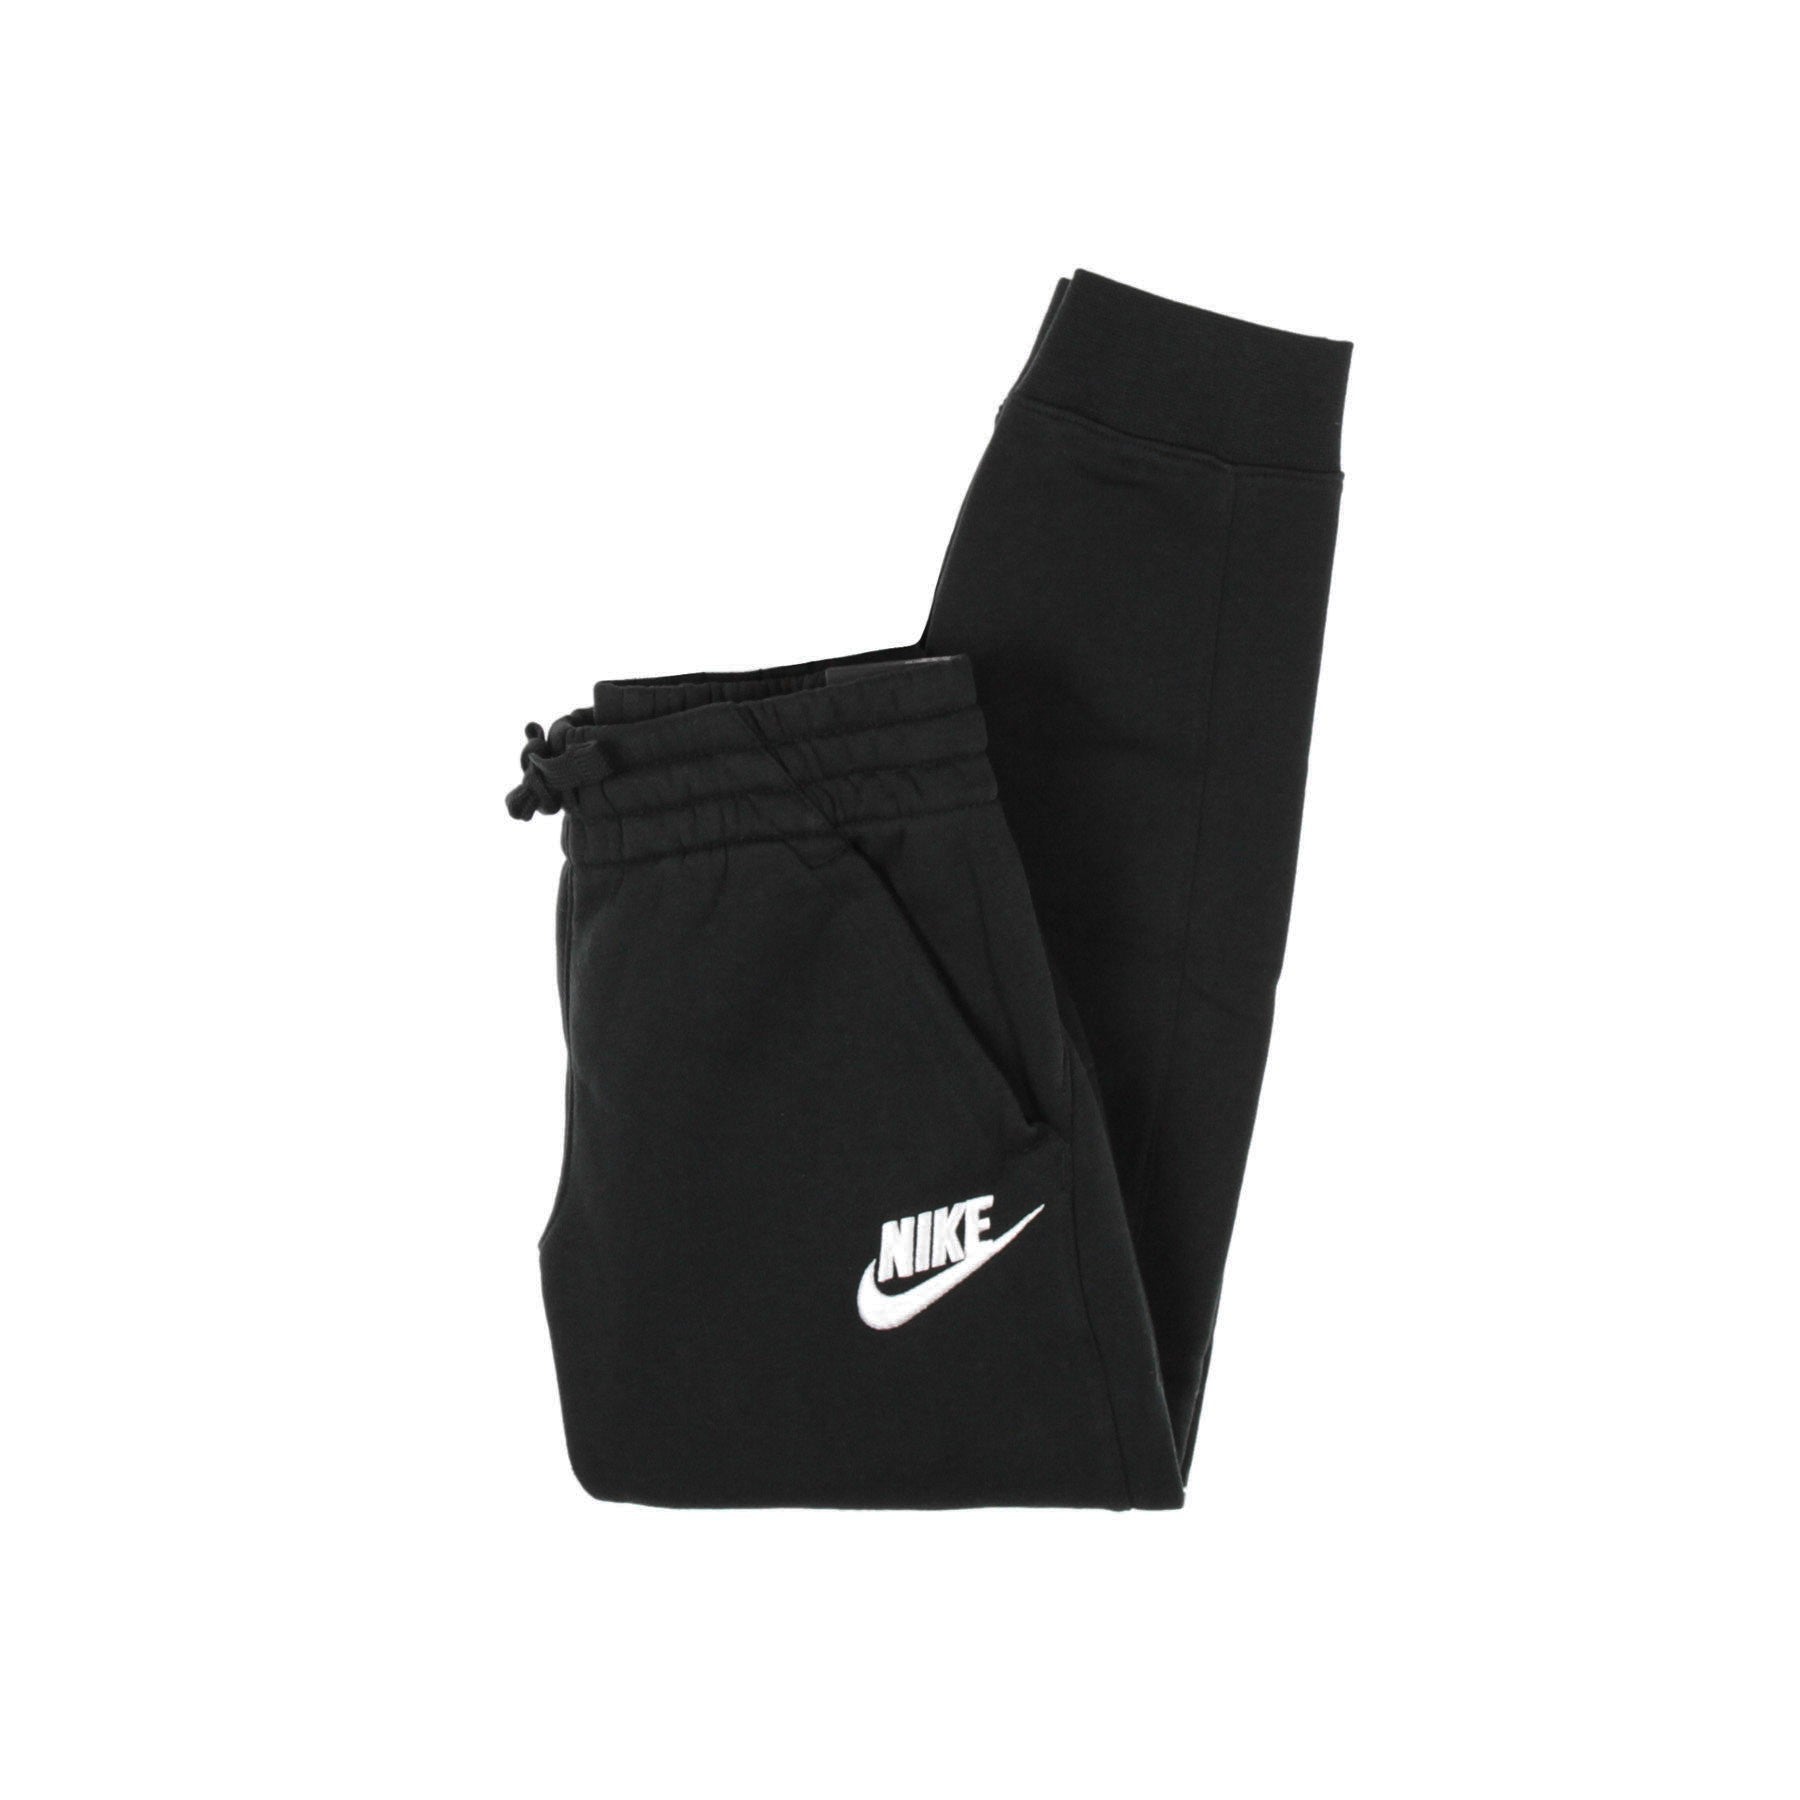 Nike, Pantalone Tuta Felpato Ragazzo Club Jogger Pant, Black/black/white